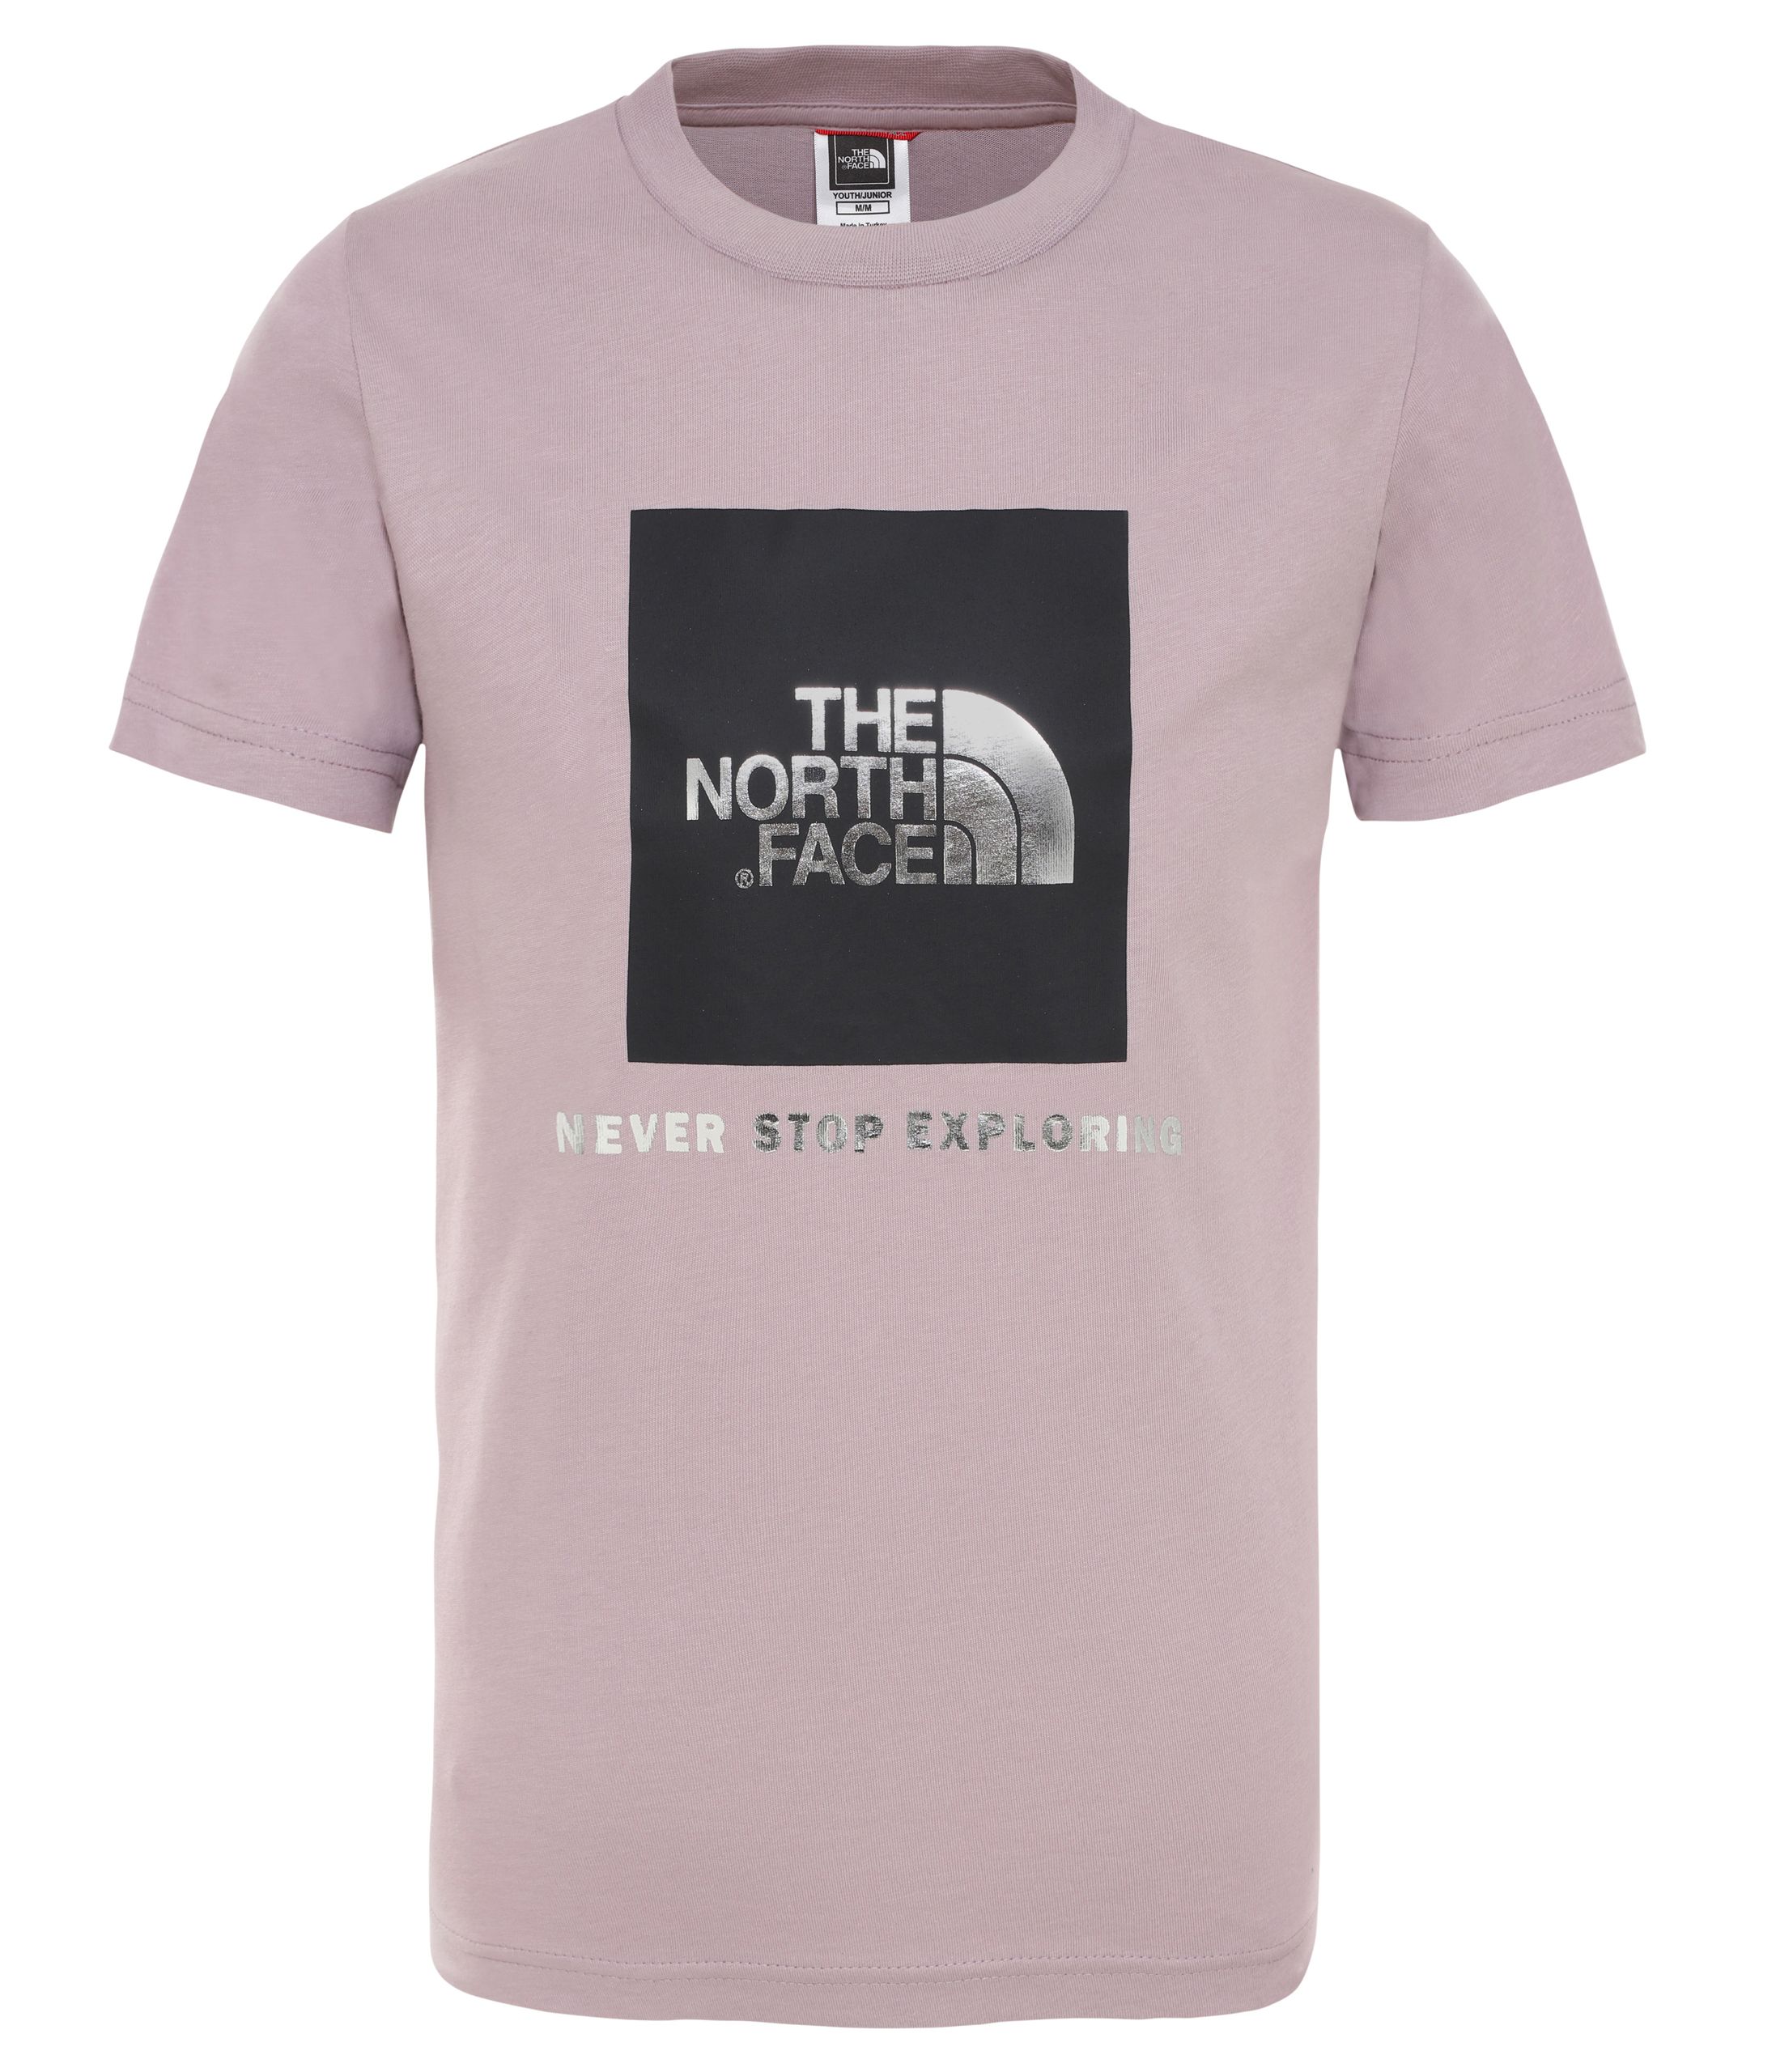 The North Face Kids Box T Shirt